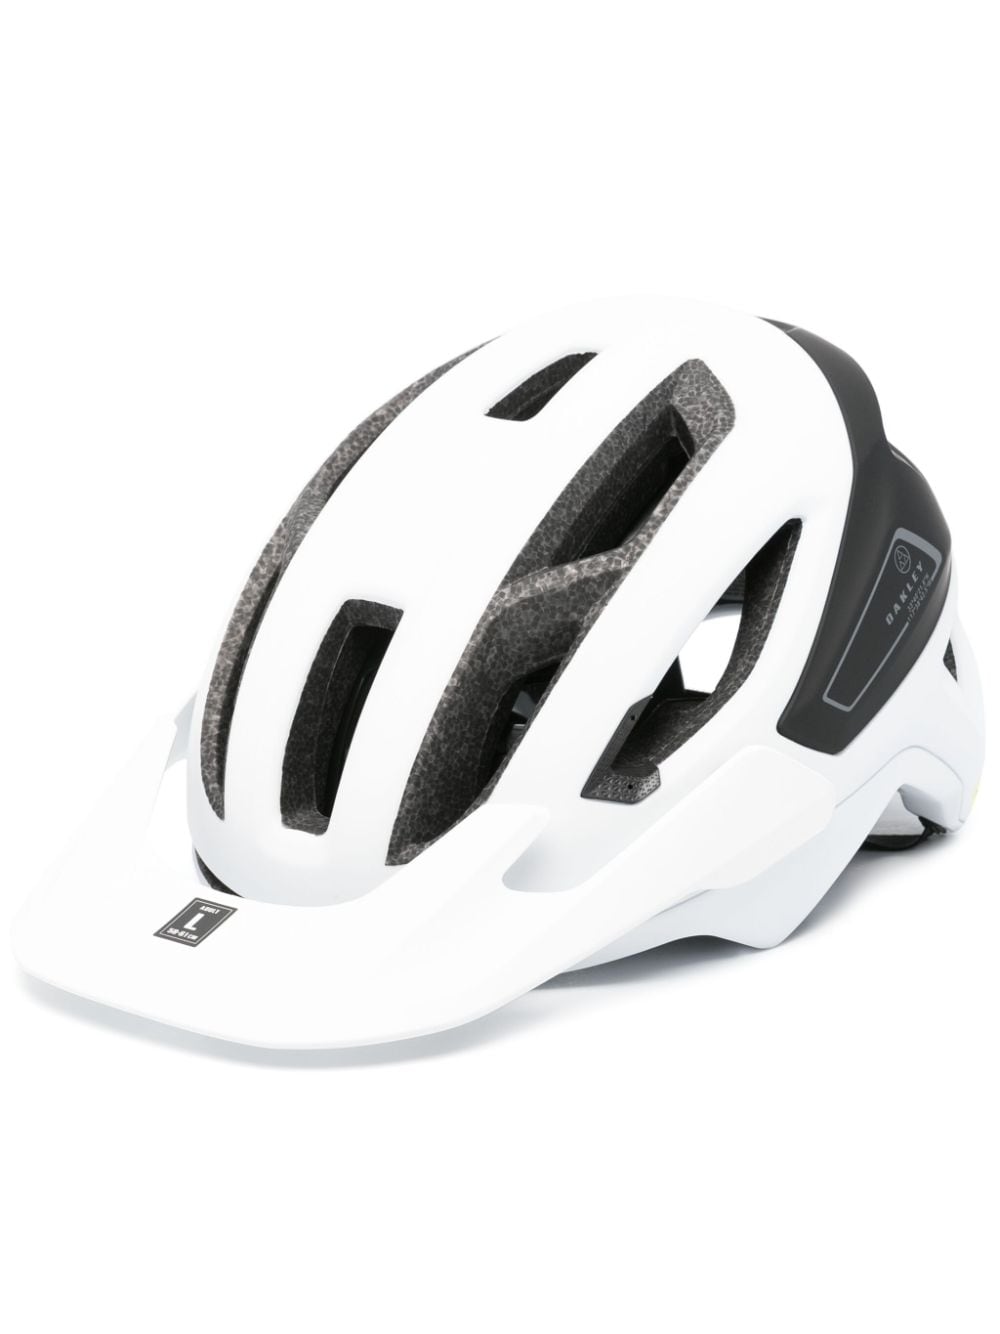 DRT3 Trail helmet<BR/><BR/><BR/>